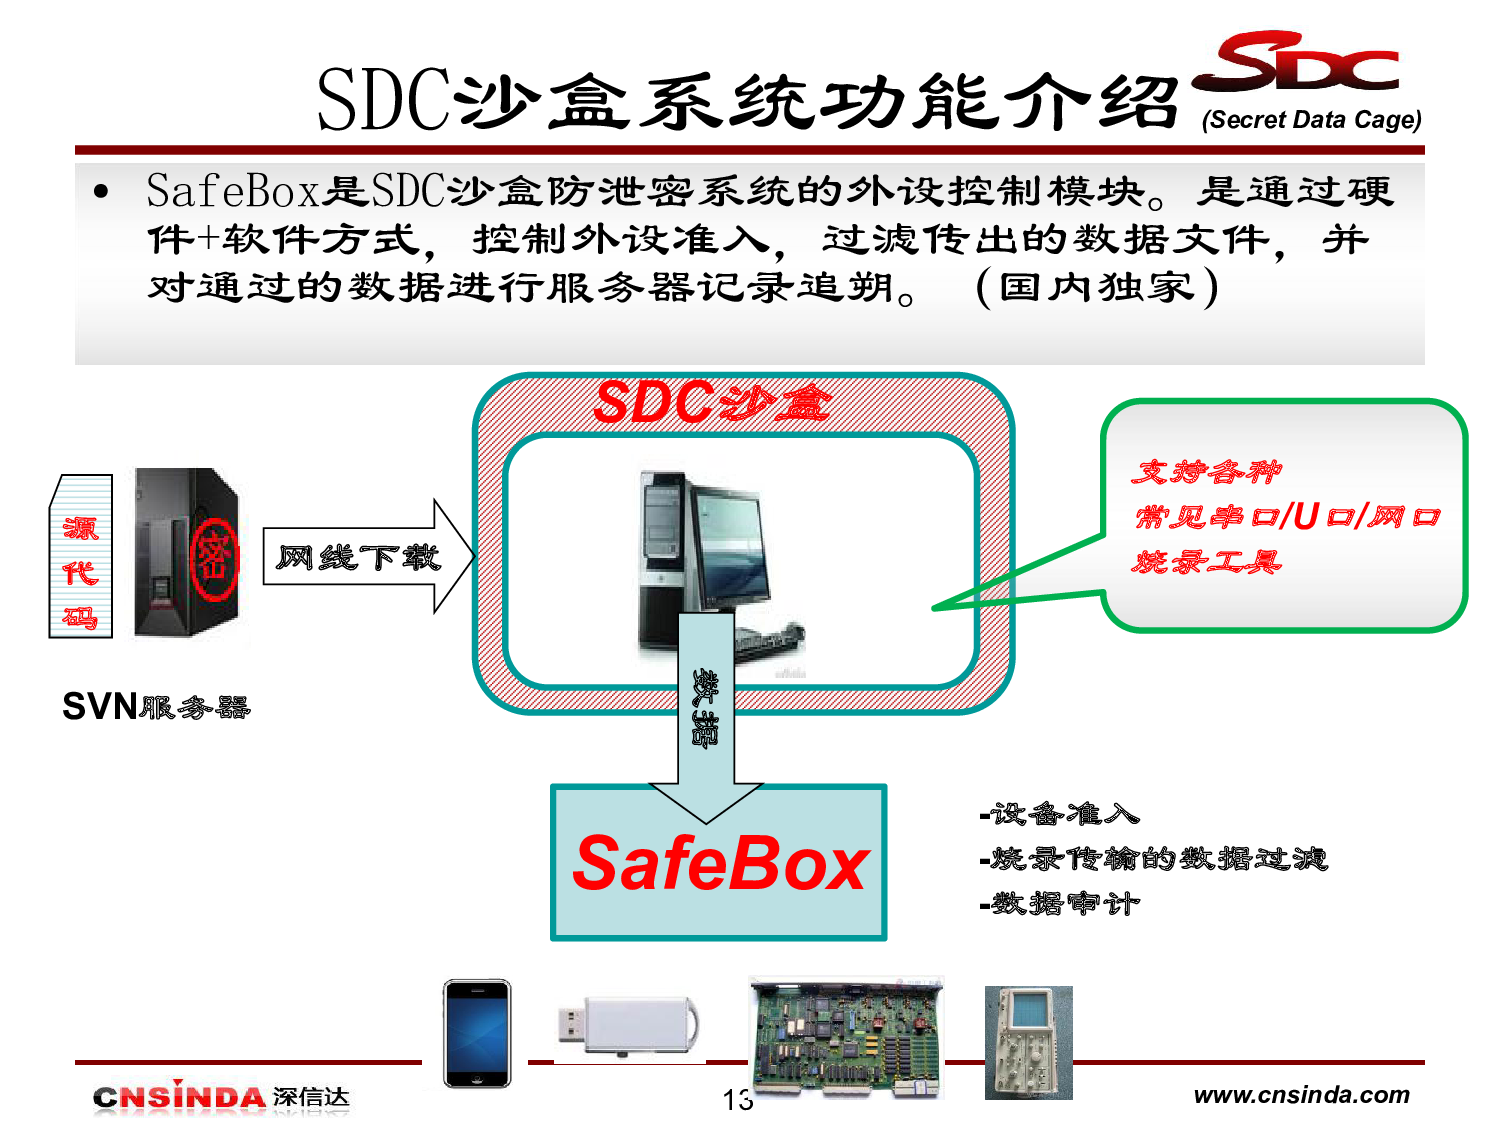 SDC沙盒图片